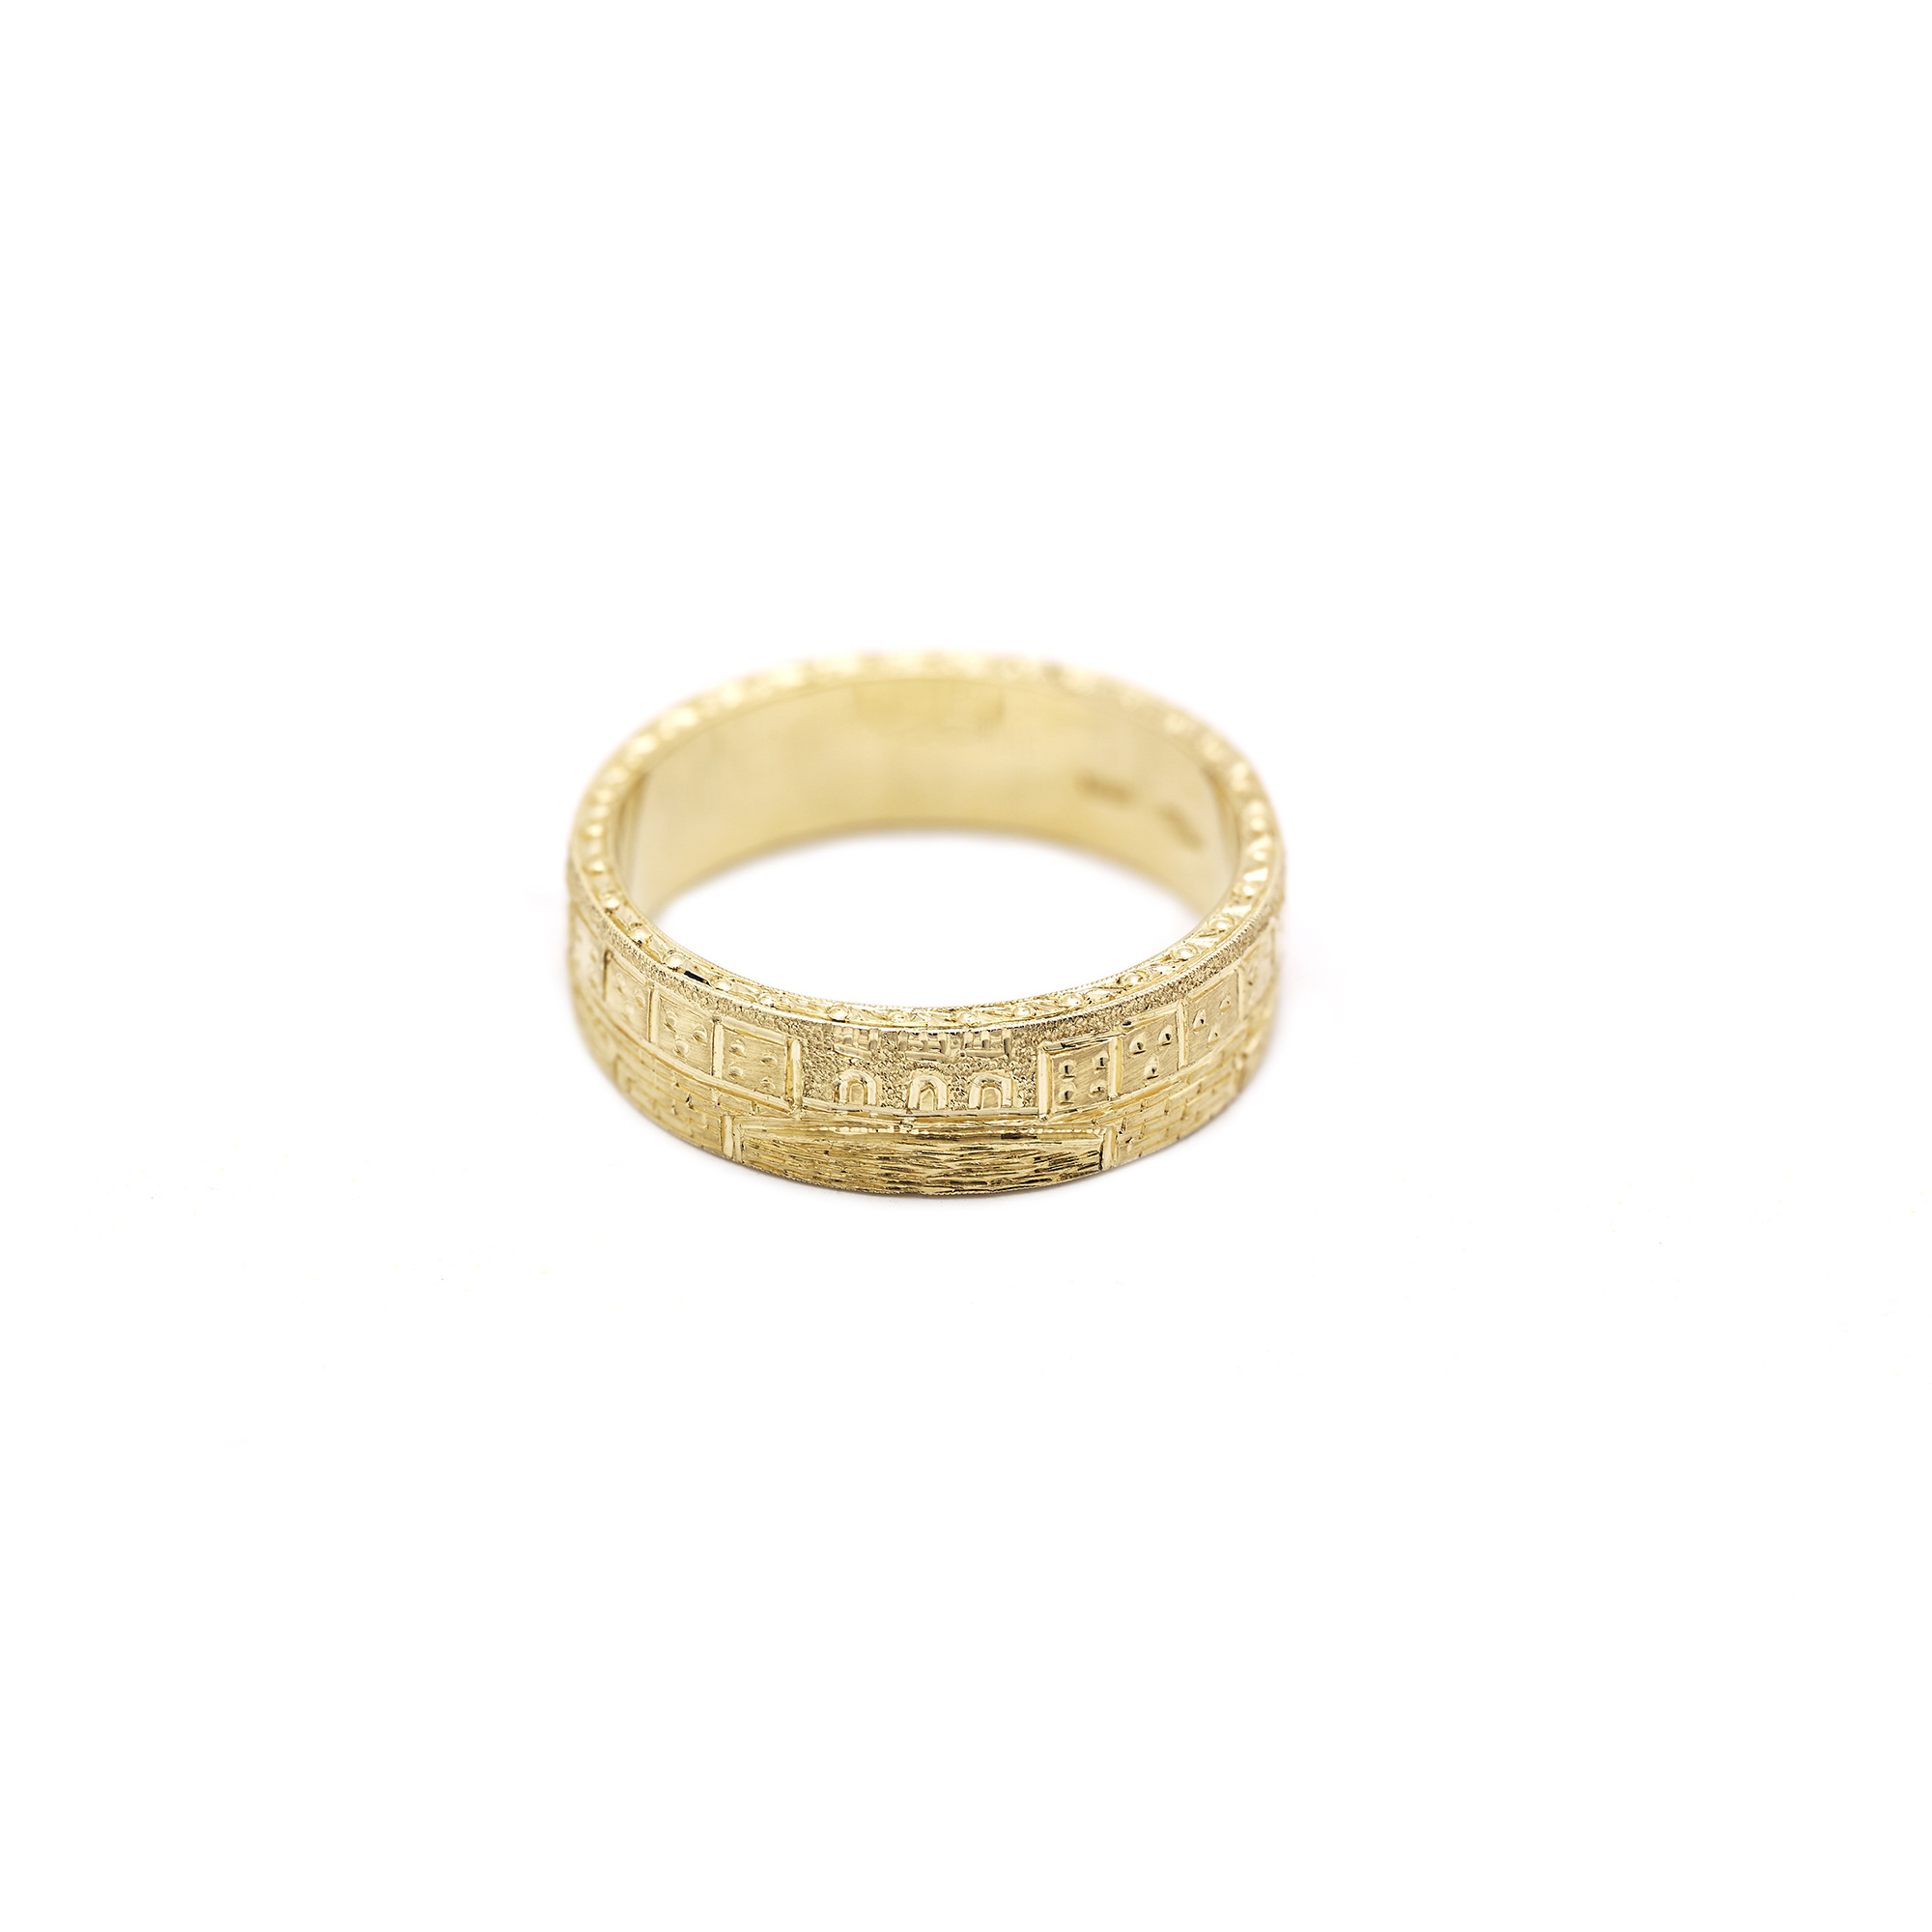 Fratelli Piccini Ponte Vecchio gold engraved ring